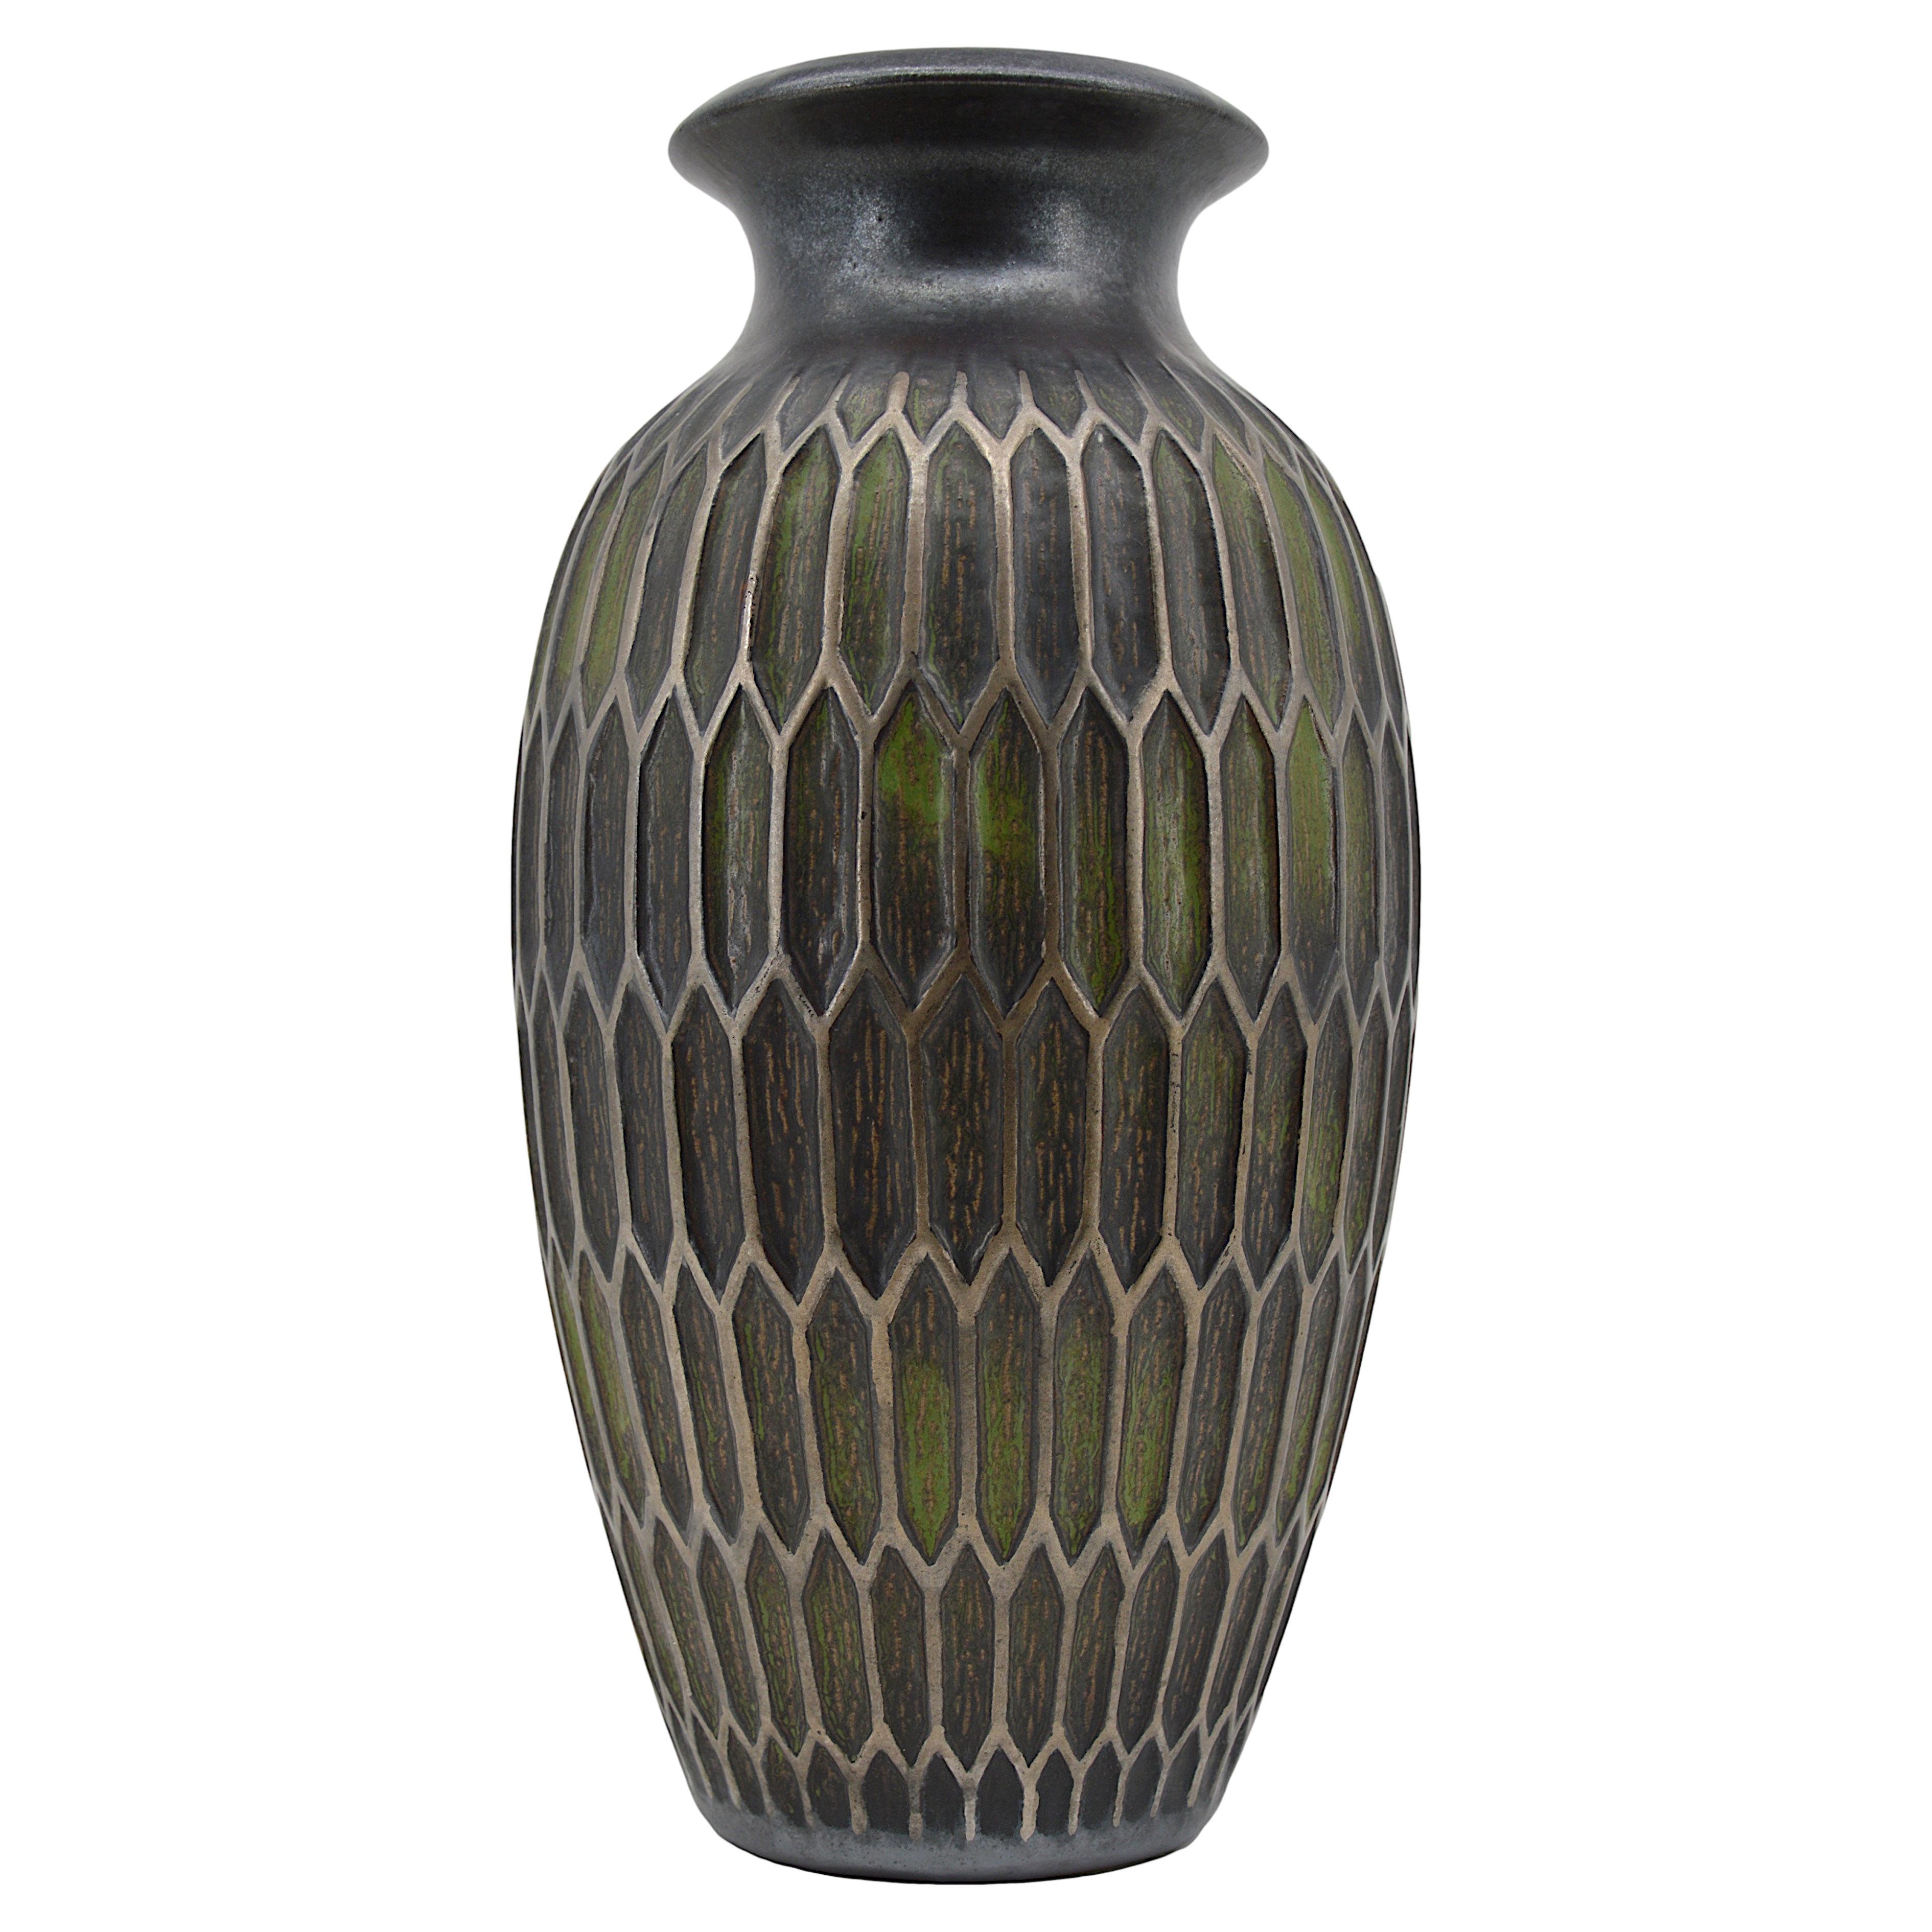 Joseph Mougin Art Deco Vase, Honeycomb, Late 1920s For Sale